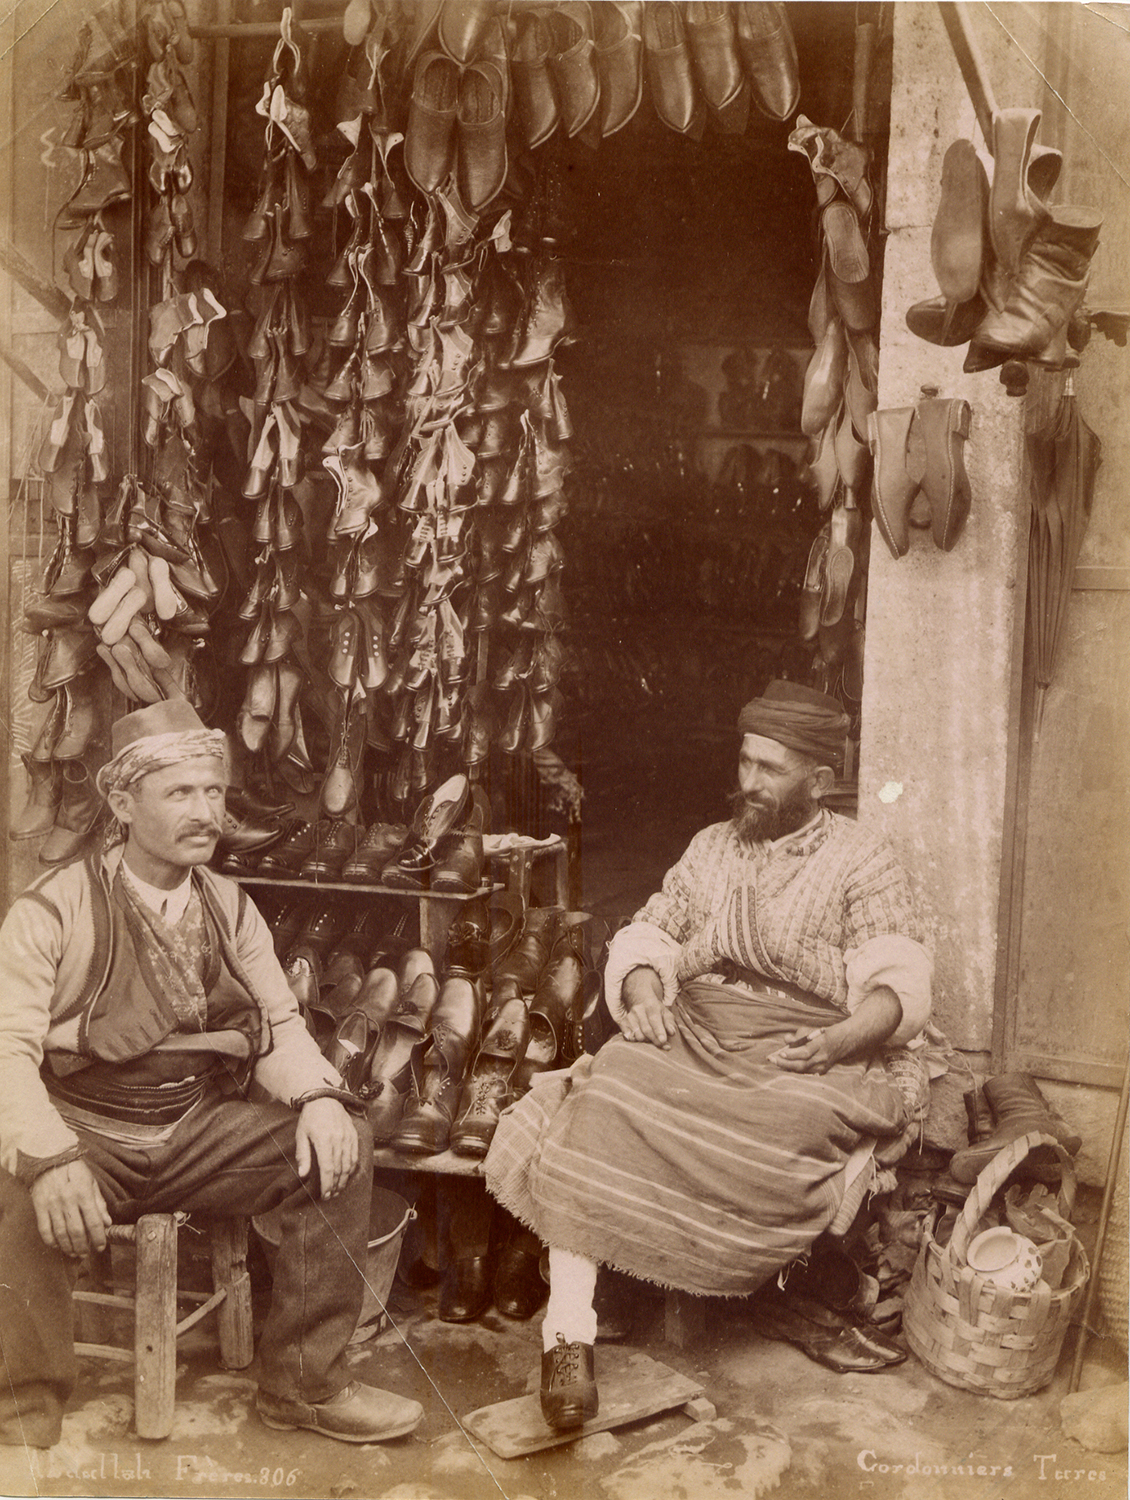 Abdullah Frères, 1870s, Turkish shoemakers.